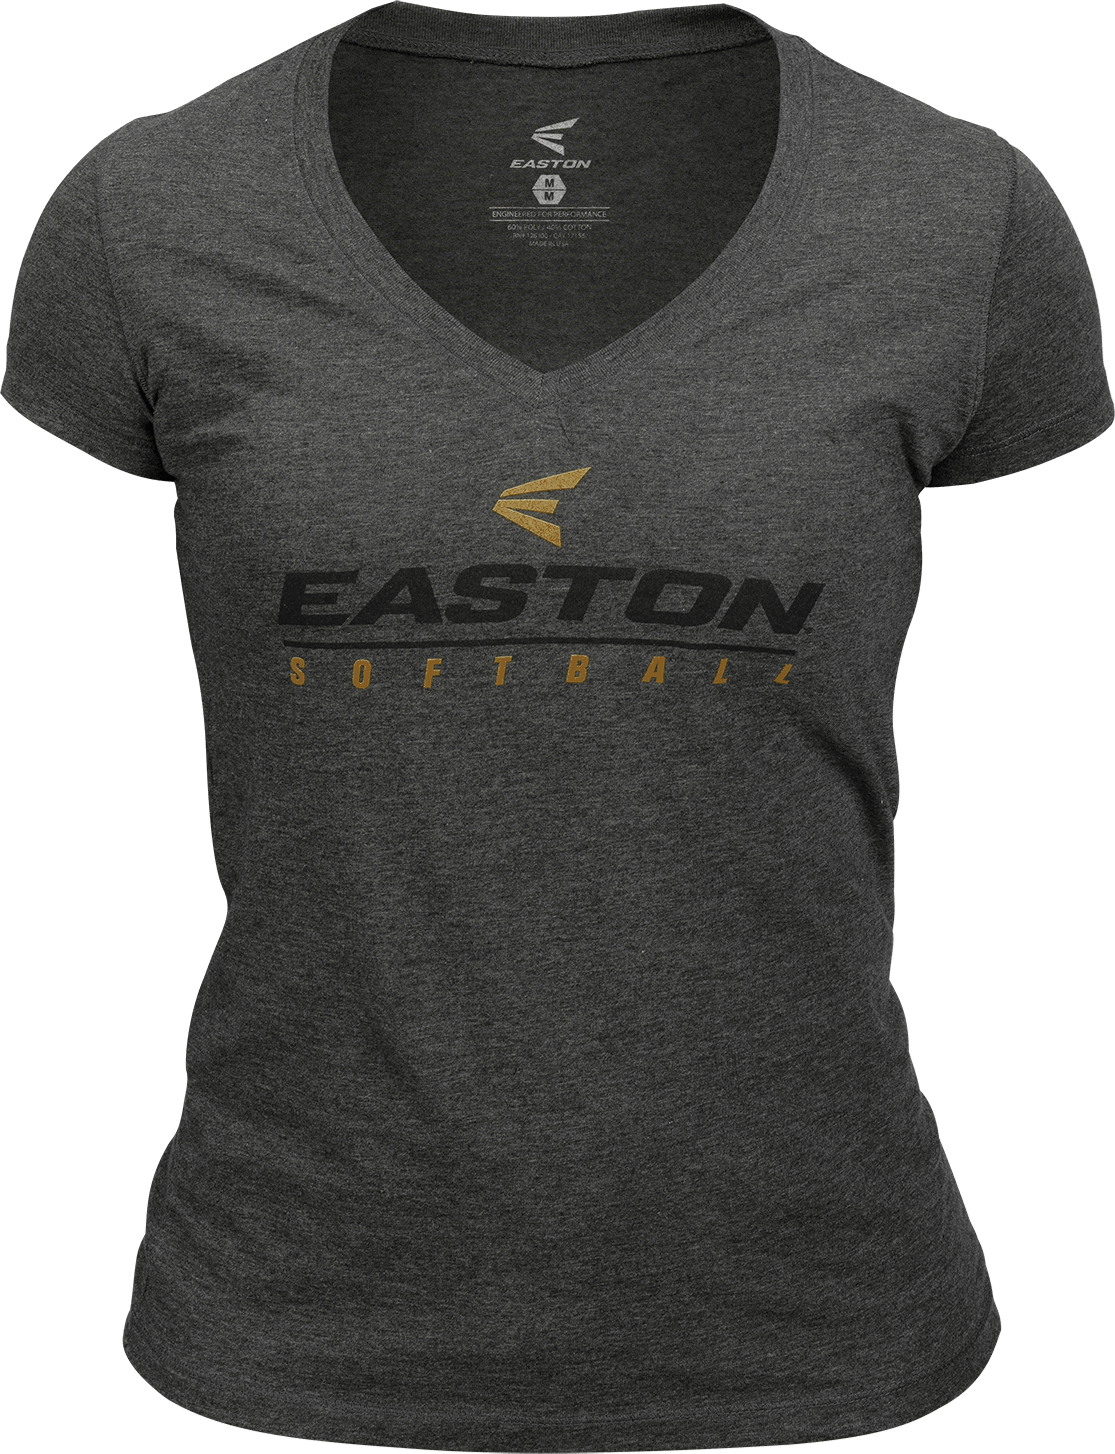 New Easton Logo - Easton Women's Softball Logo Shirt | Baseball Express